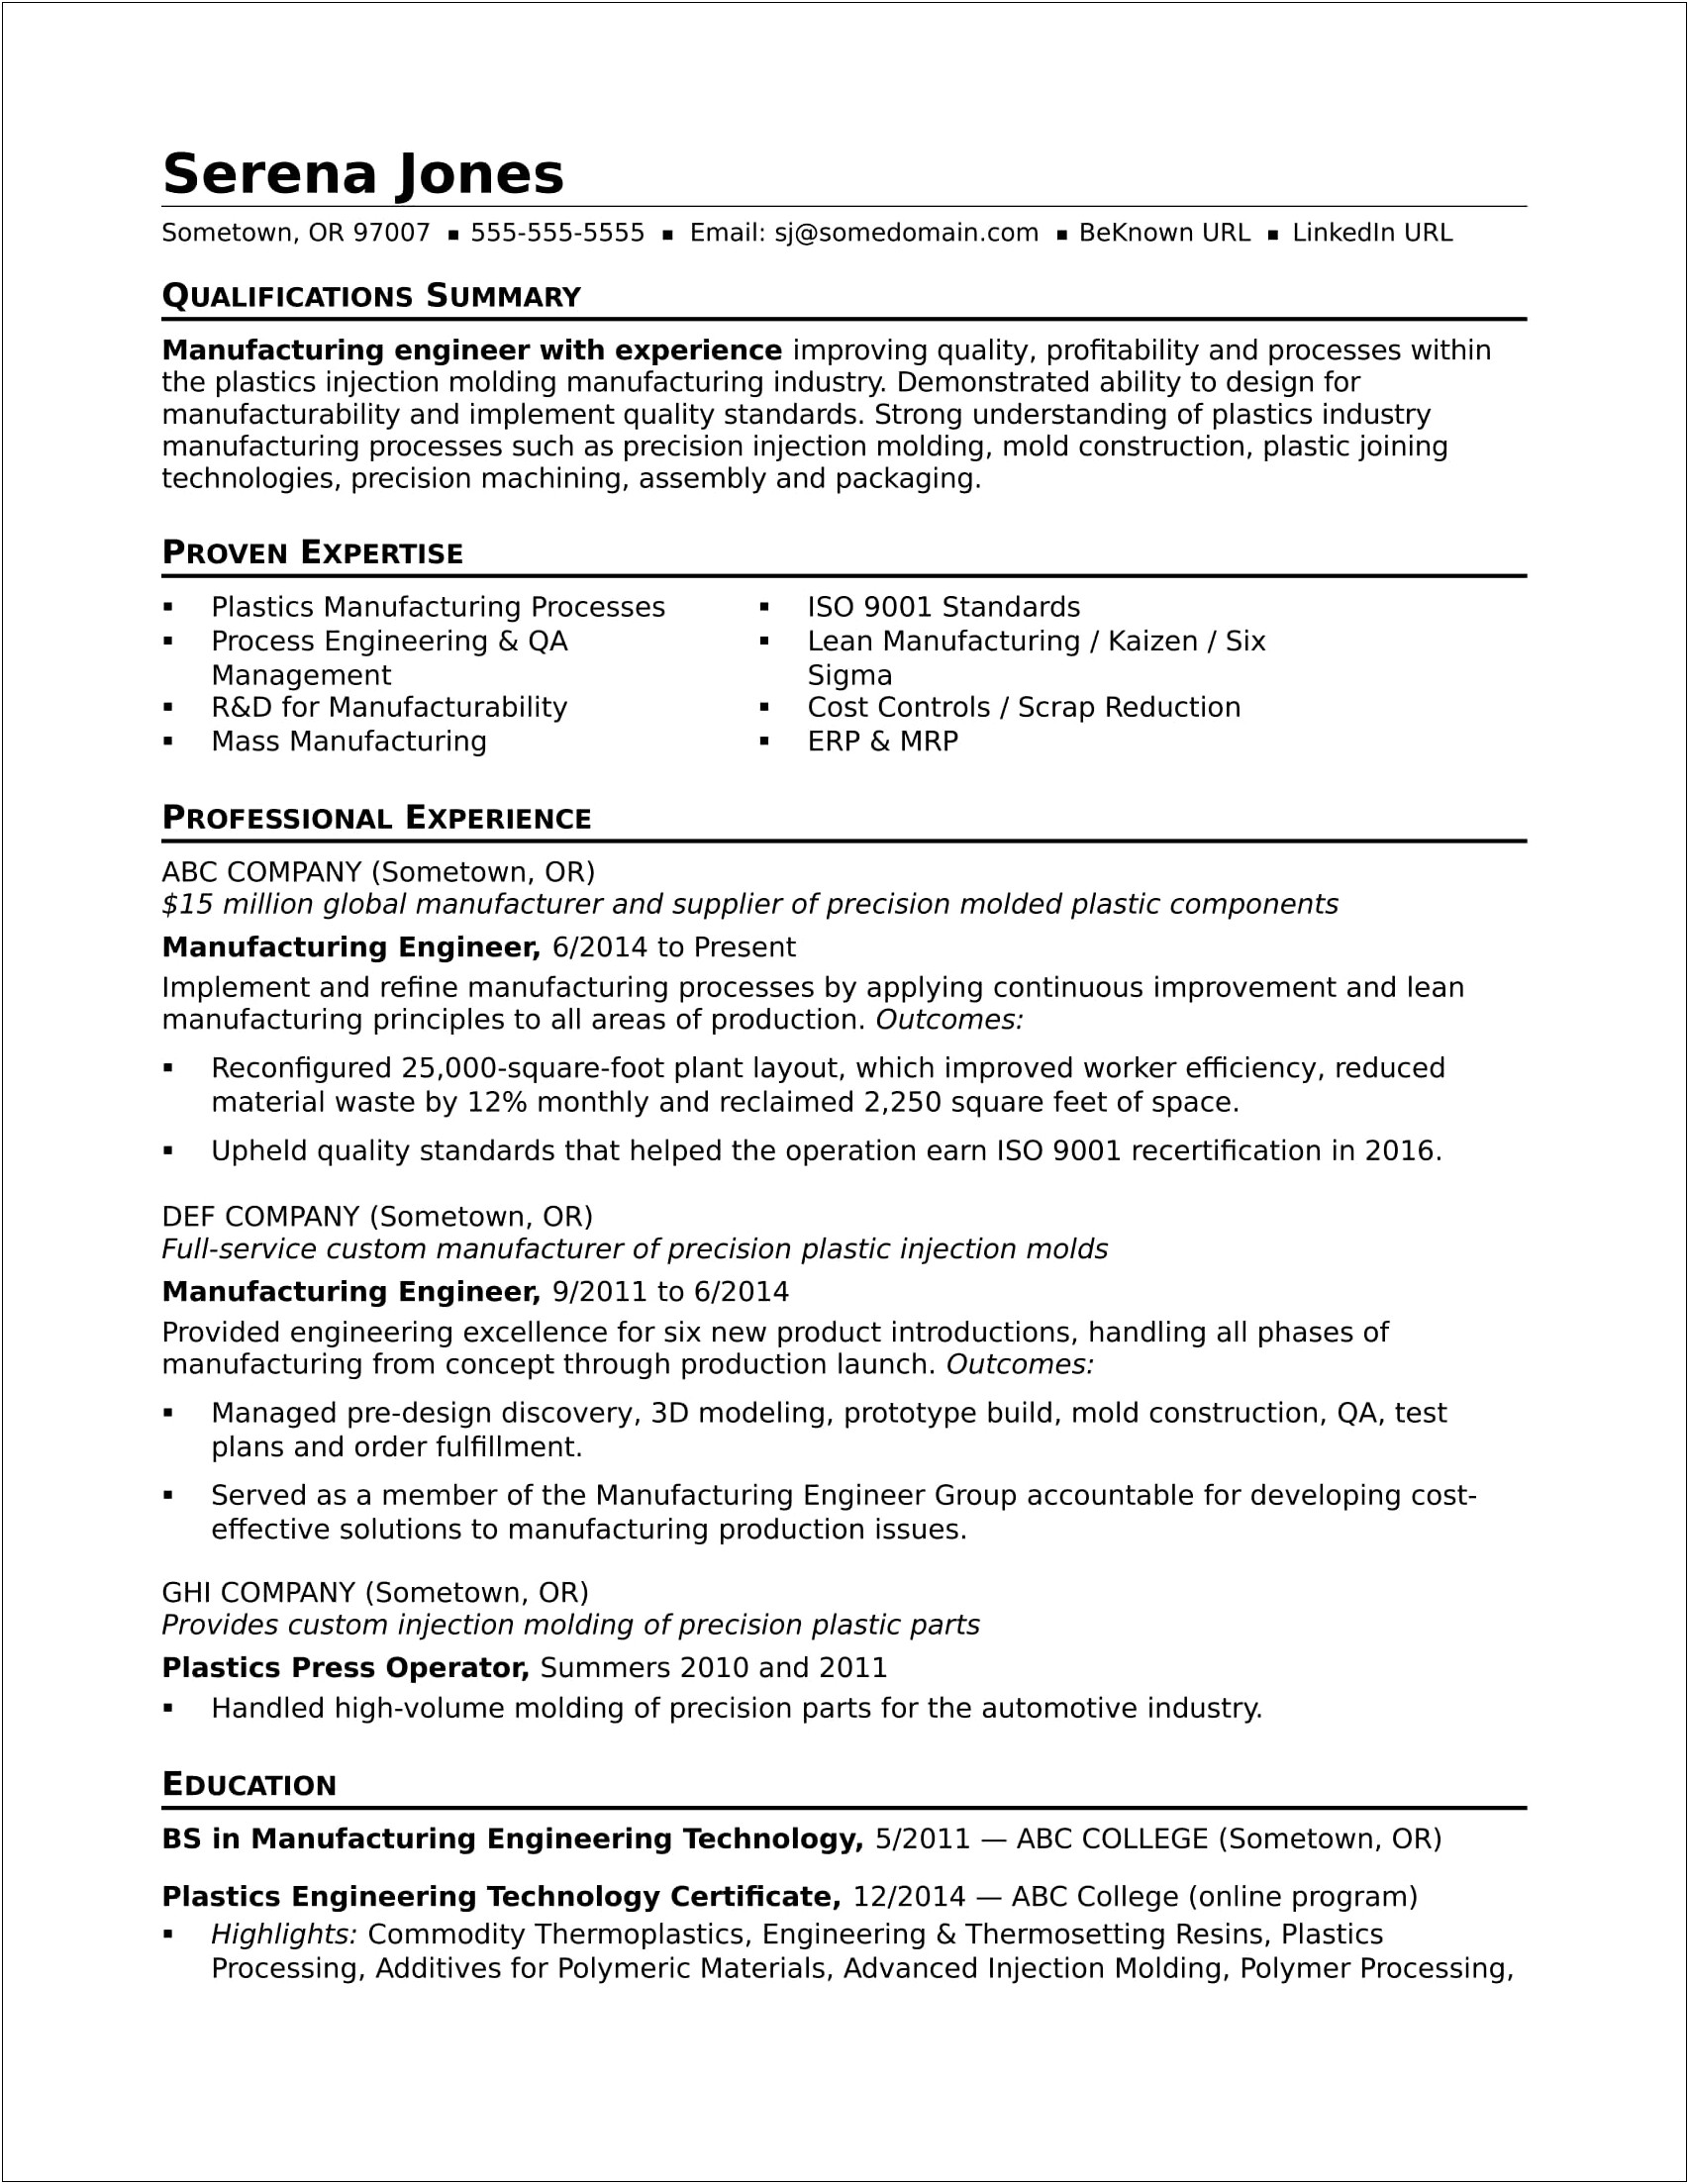 Resume Career Summary Engineering Entry Level